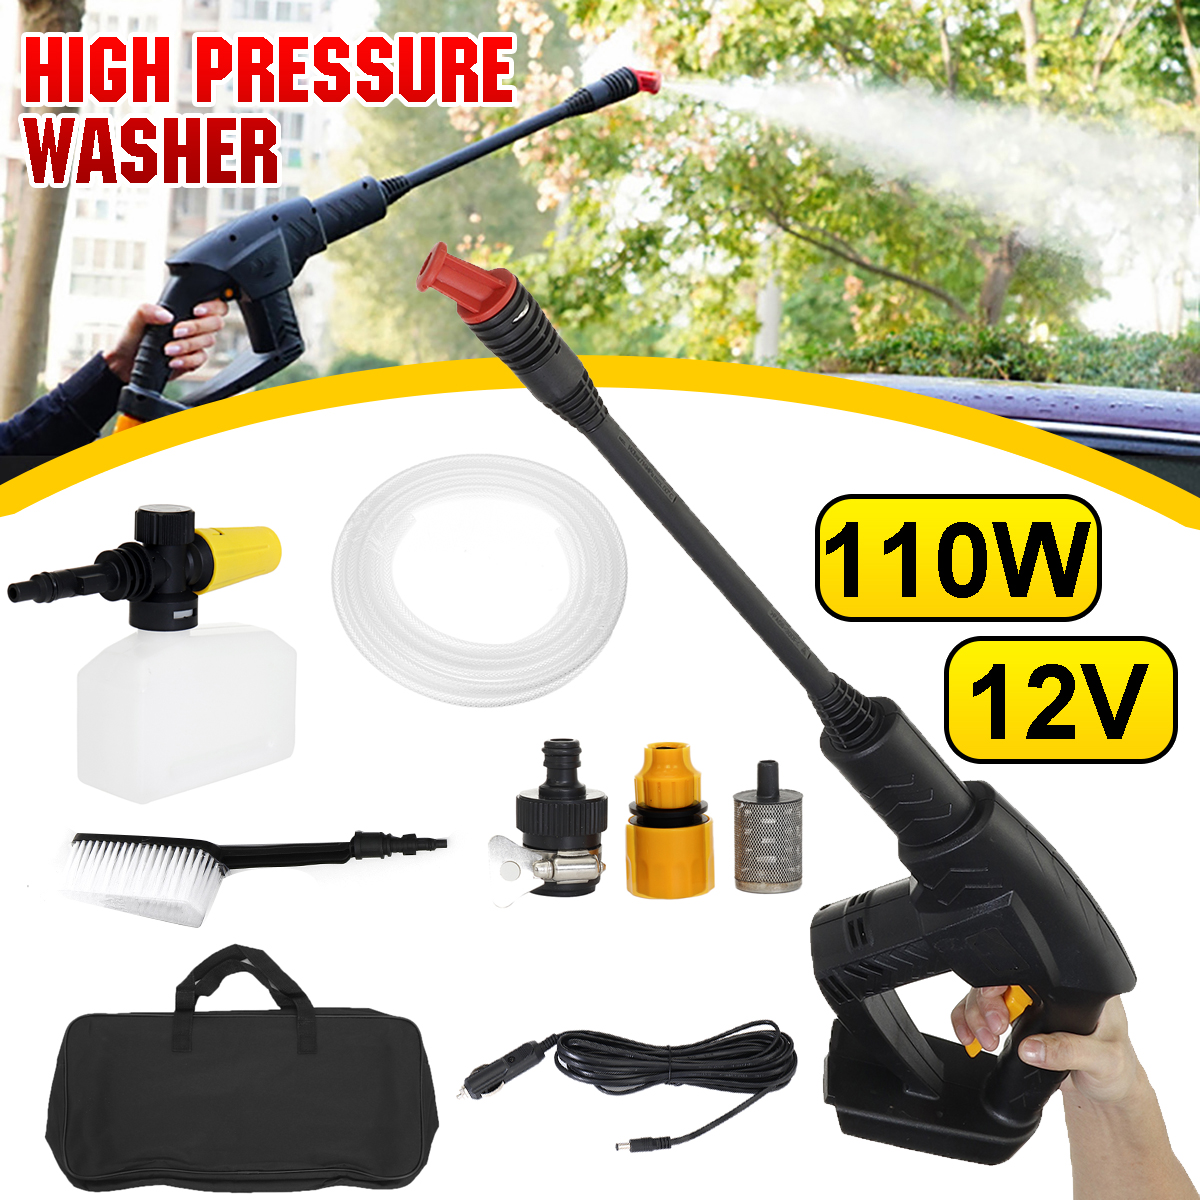 110W-7911Set-High-Pressure-Washer-Guns-Lance-Wand-trigger-Pressure-Cleaner-1794322-1